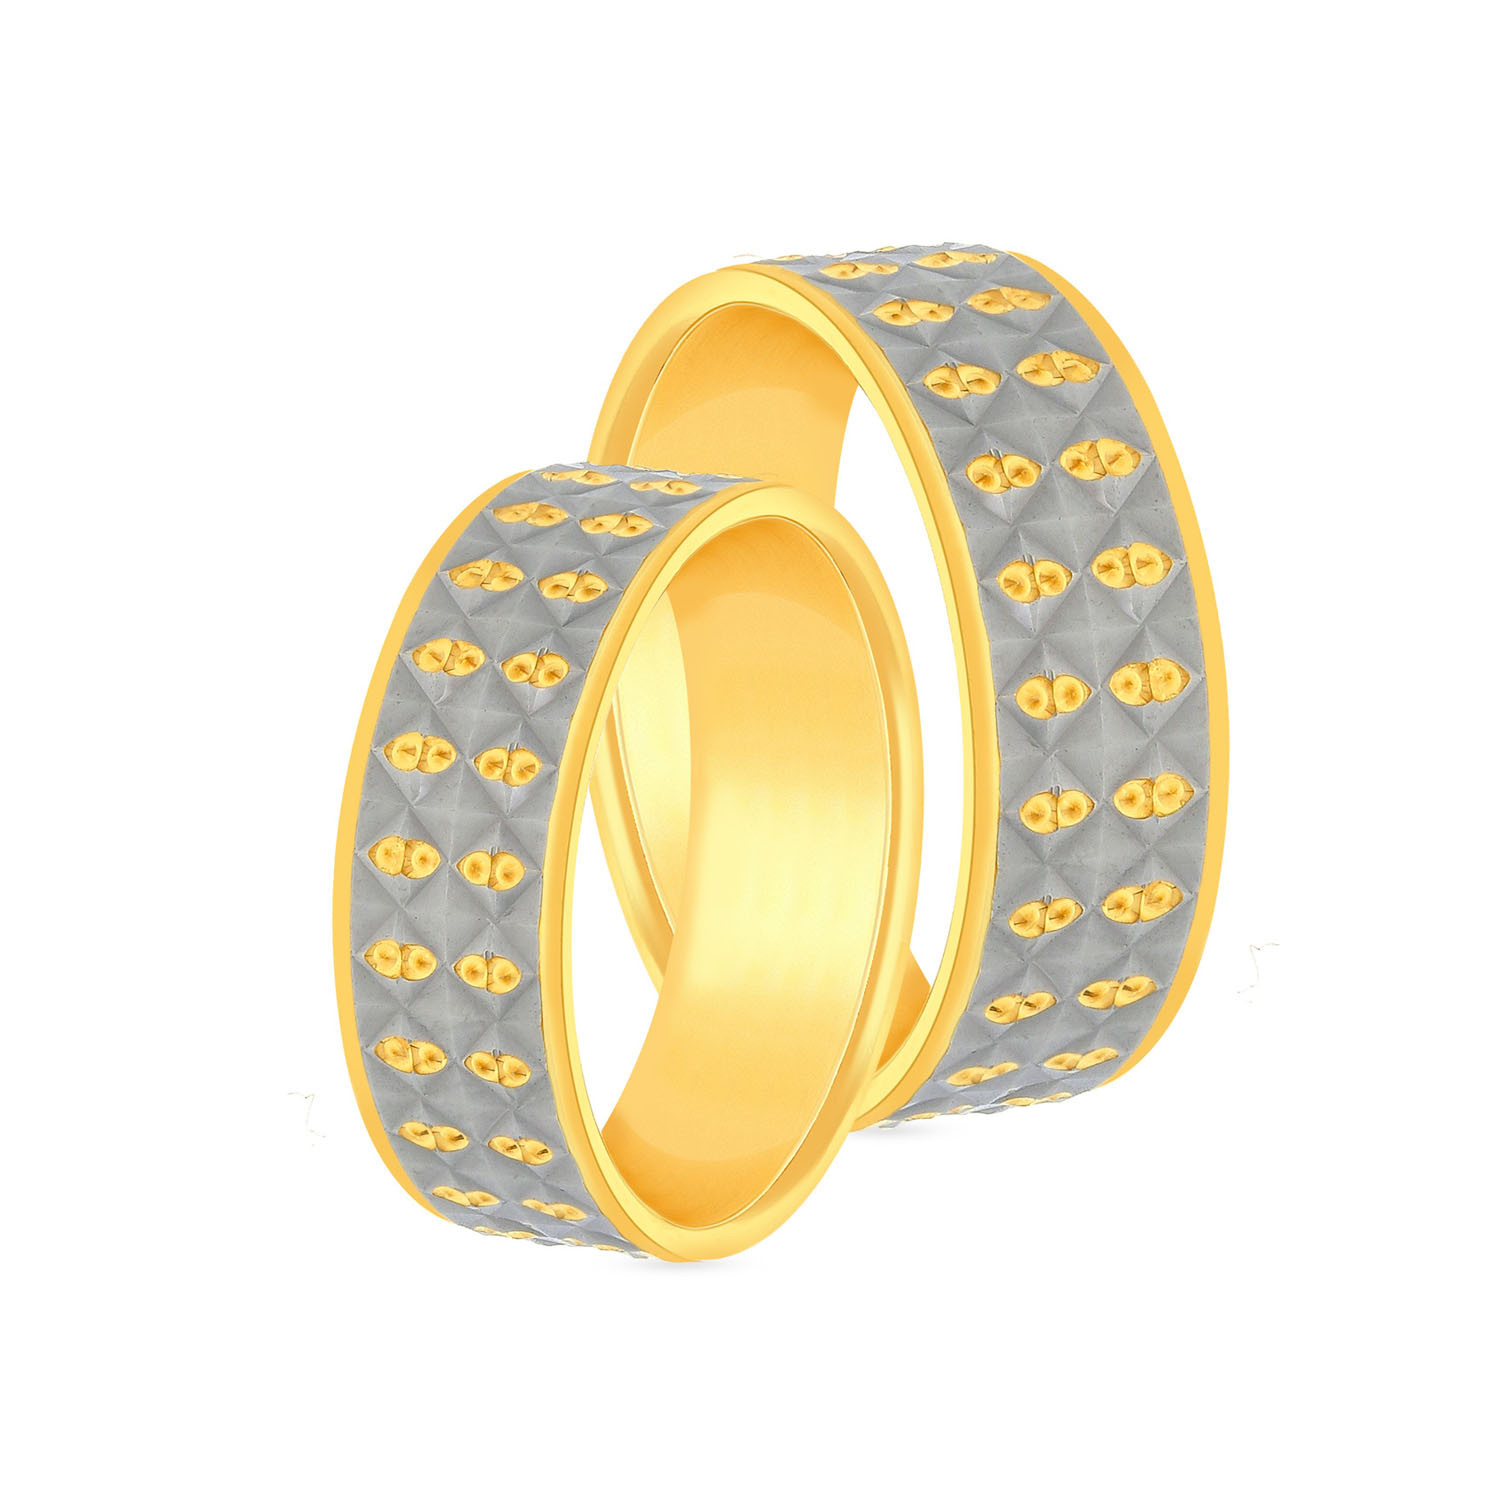 Jewelove Platinum Pt 950 Designer Wedding Bands with Diamonds Couple Ring  JL PT 239 | Amazon.com